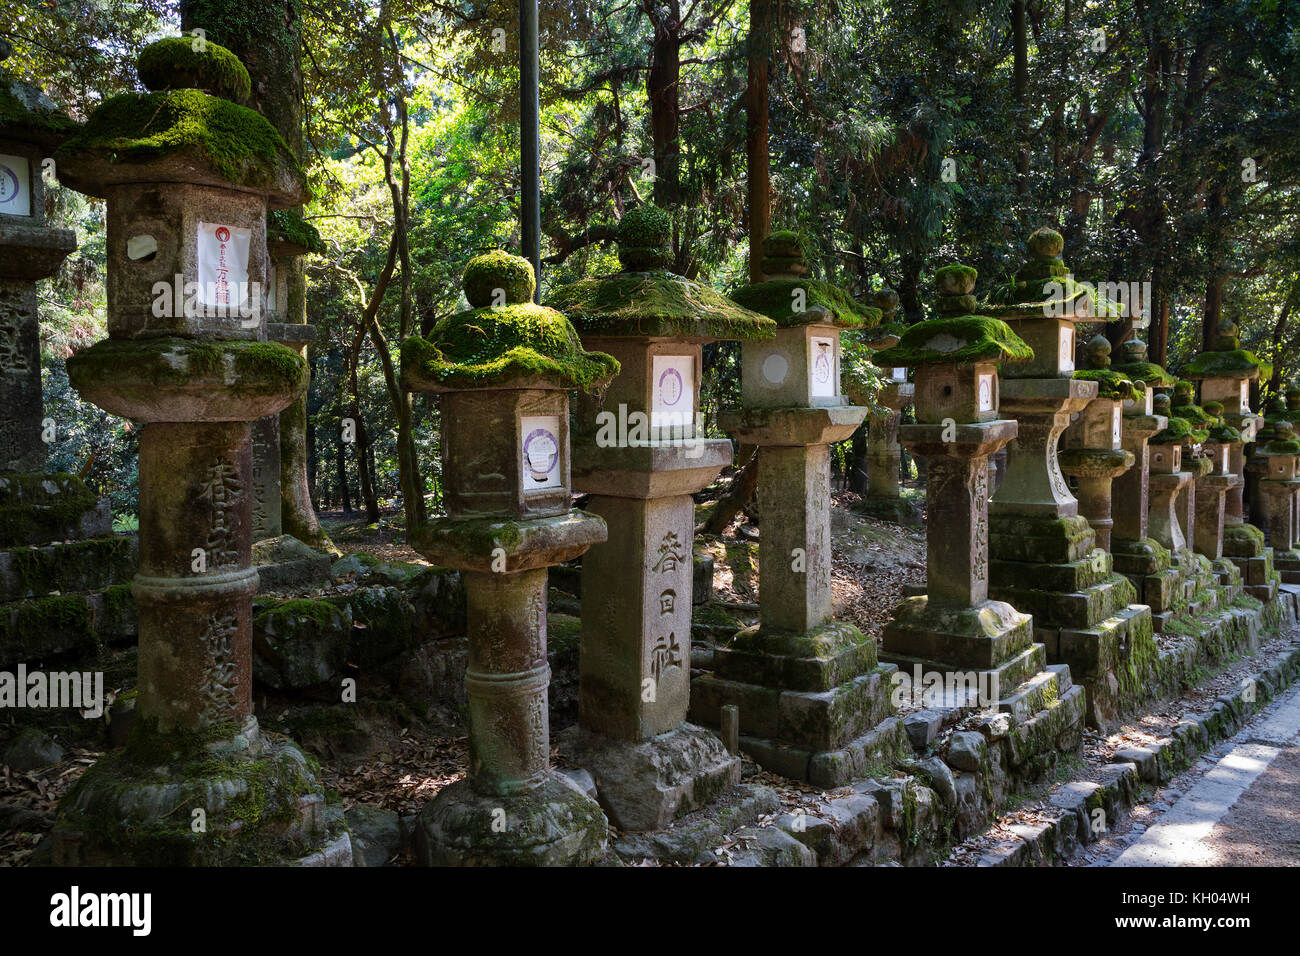 Nara - Japan, May 29, 2017: Many stone lanterns covered with moss near the path that lead up to the Kasuga Taisha shrine Stock Photo